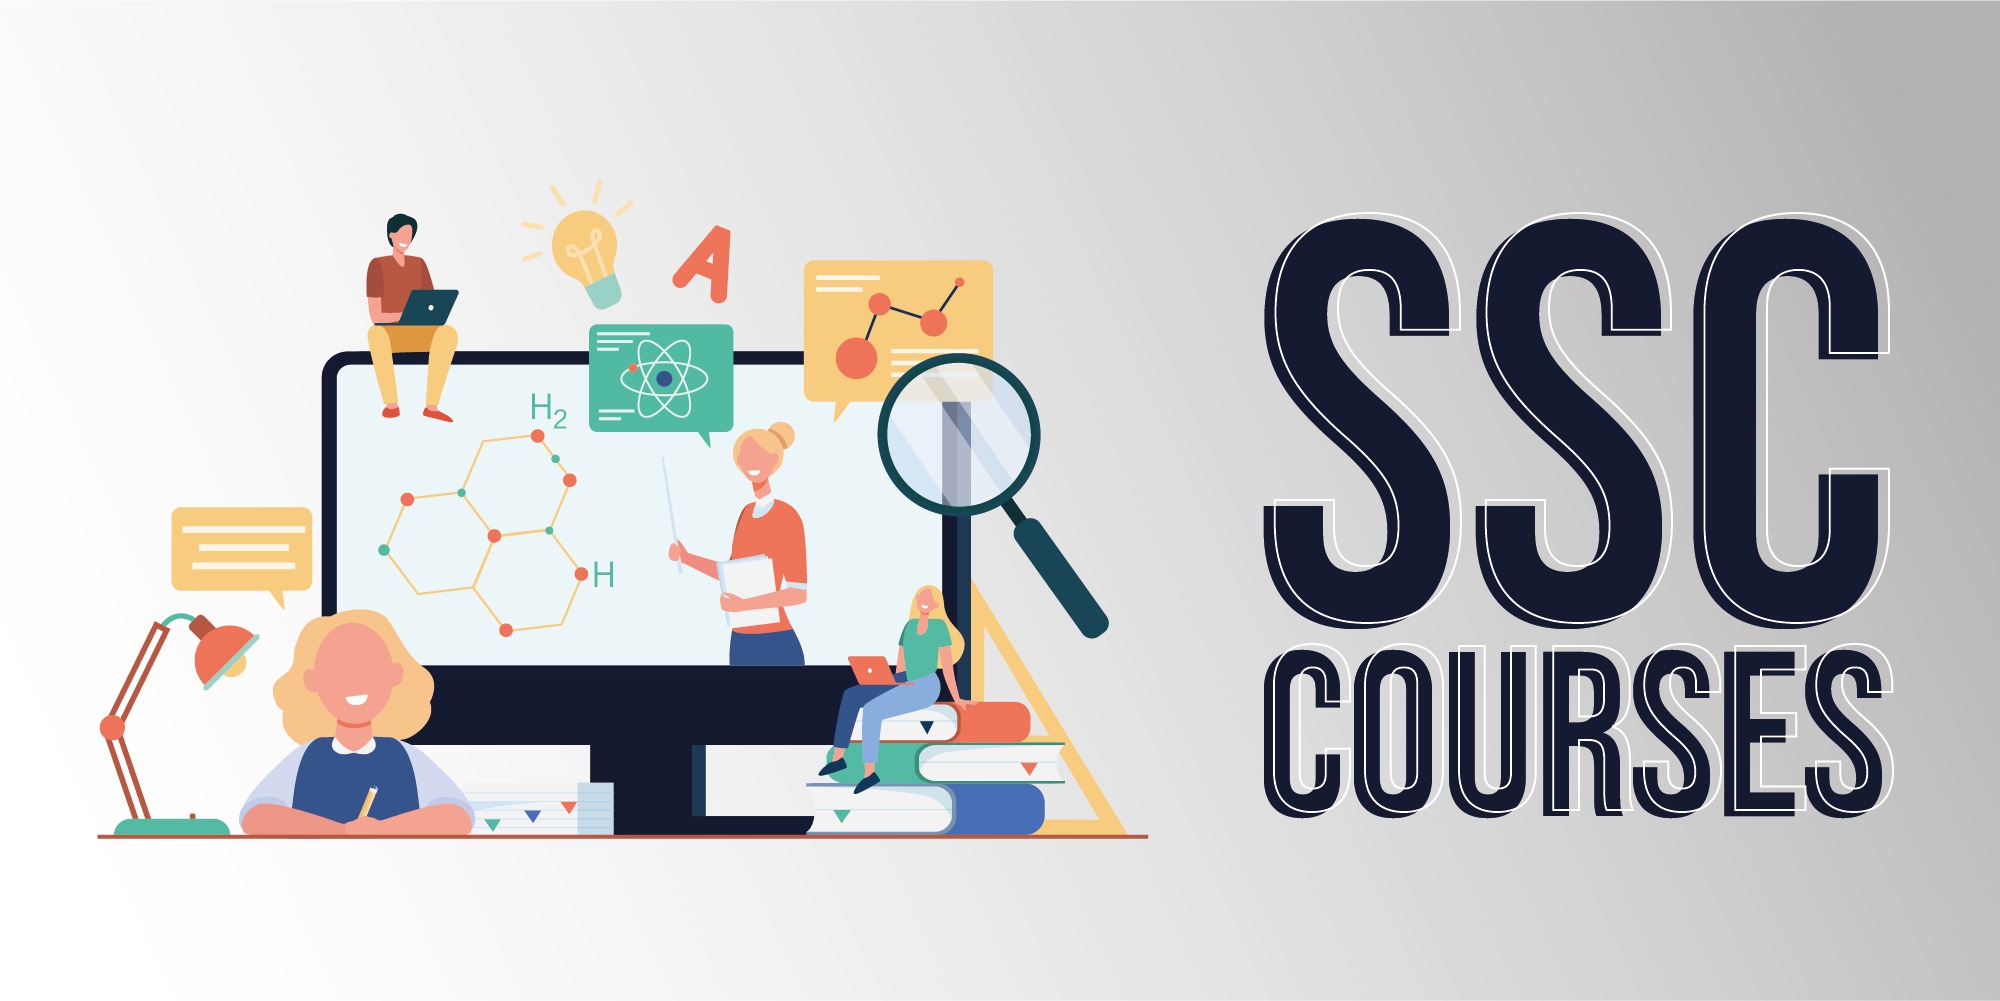 SSC Courses